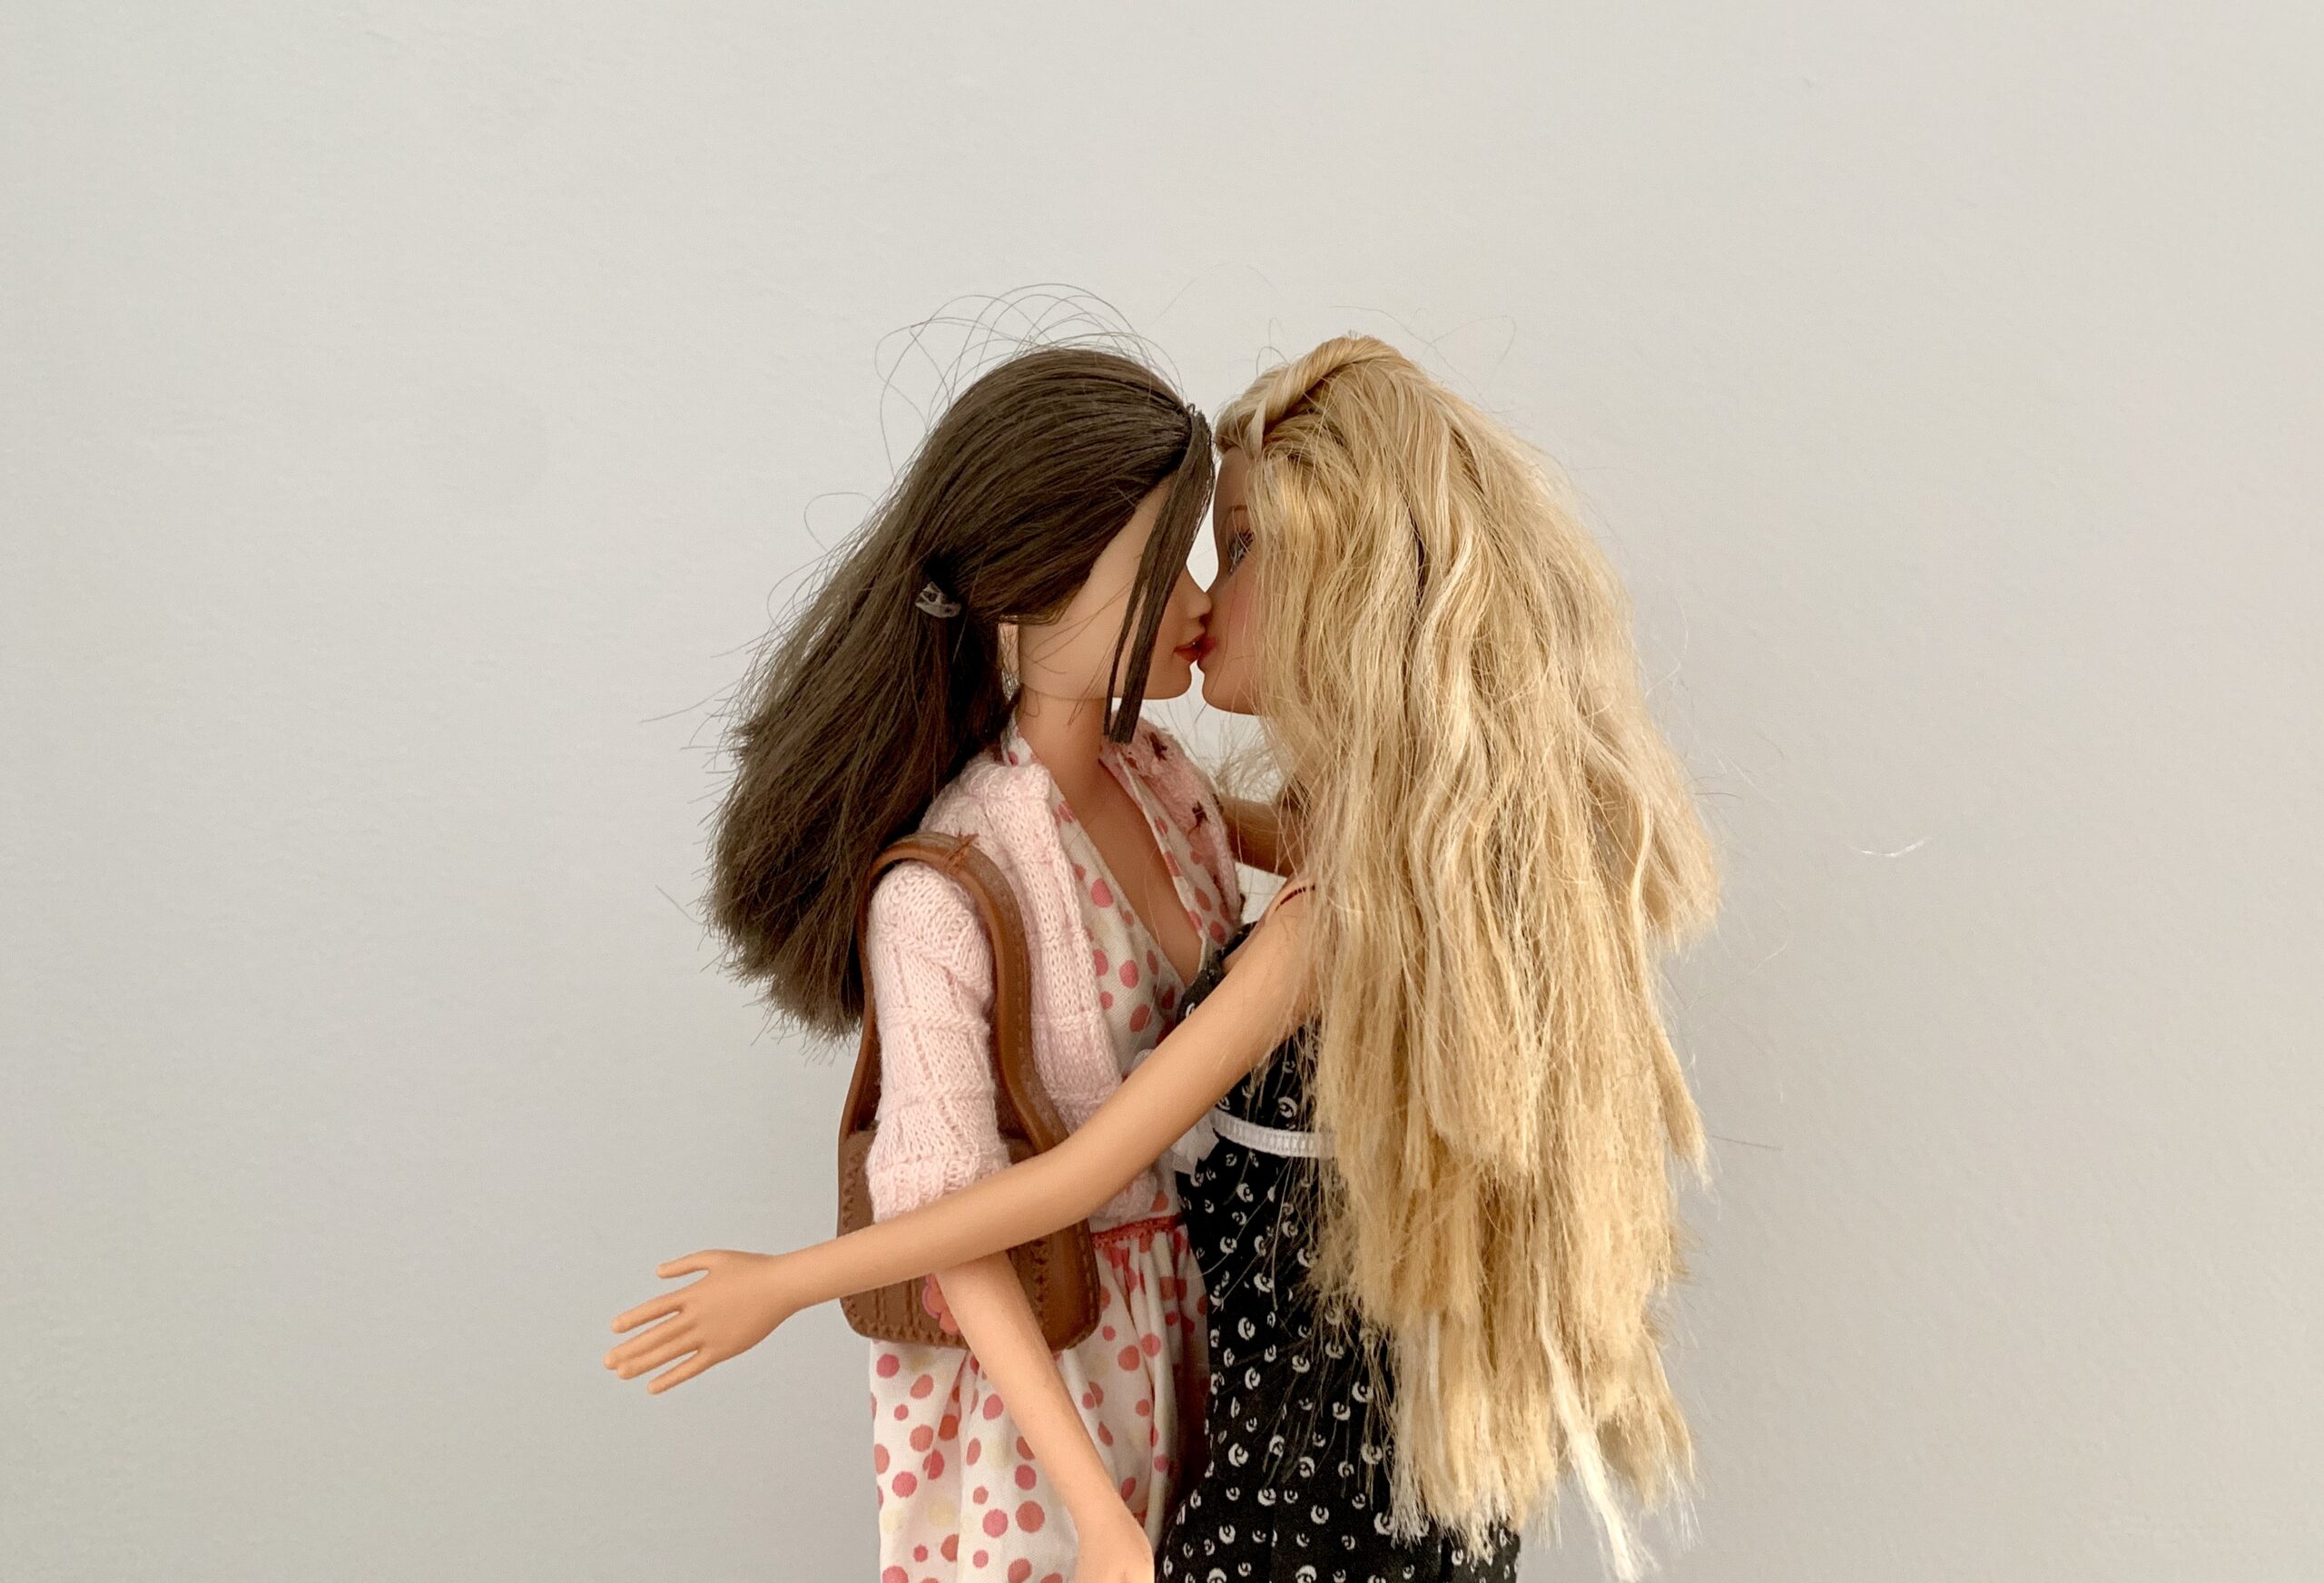 barbie love kiss